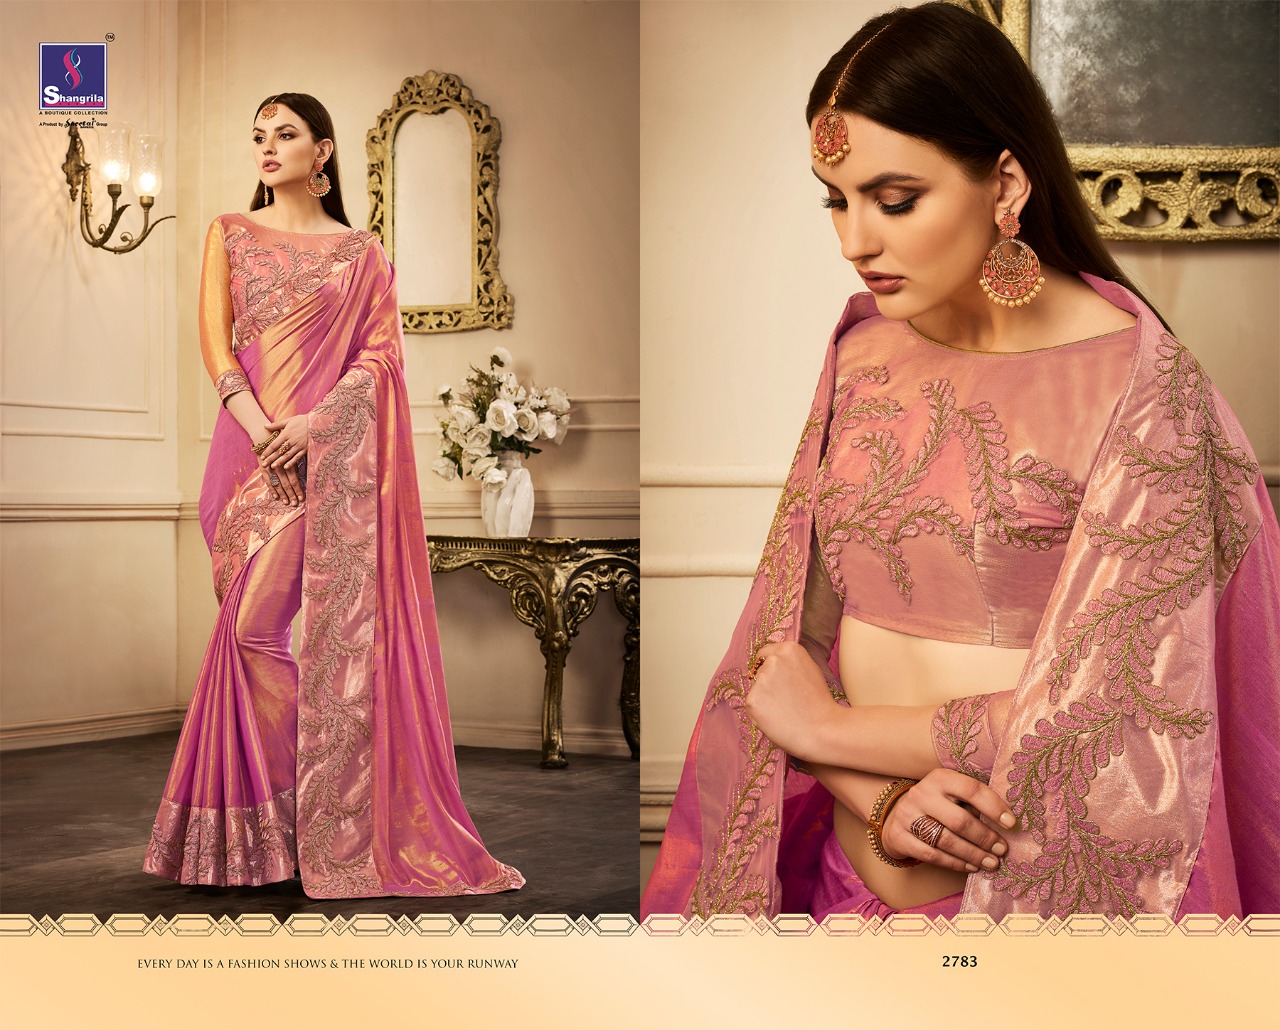 Shangrila presents chandan silk fancy collection of sarees